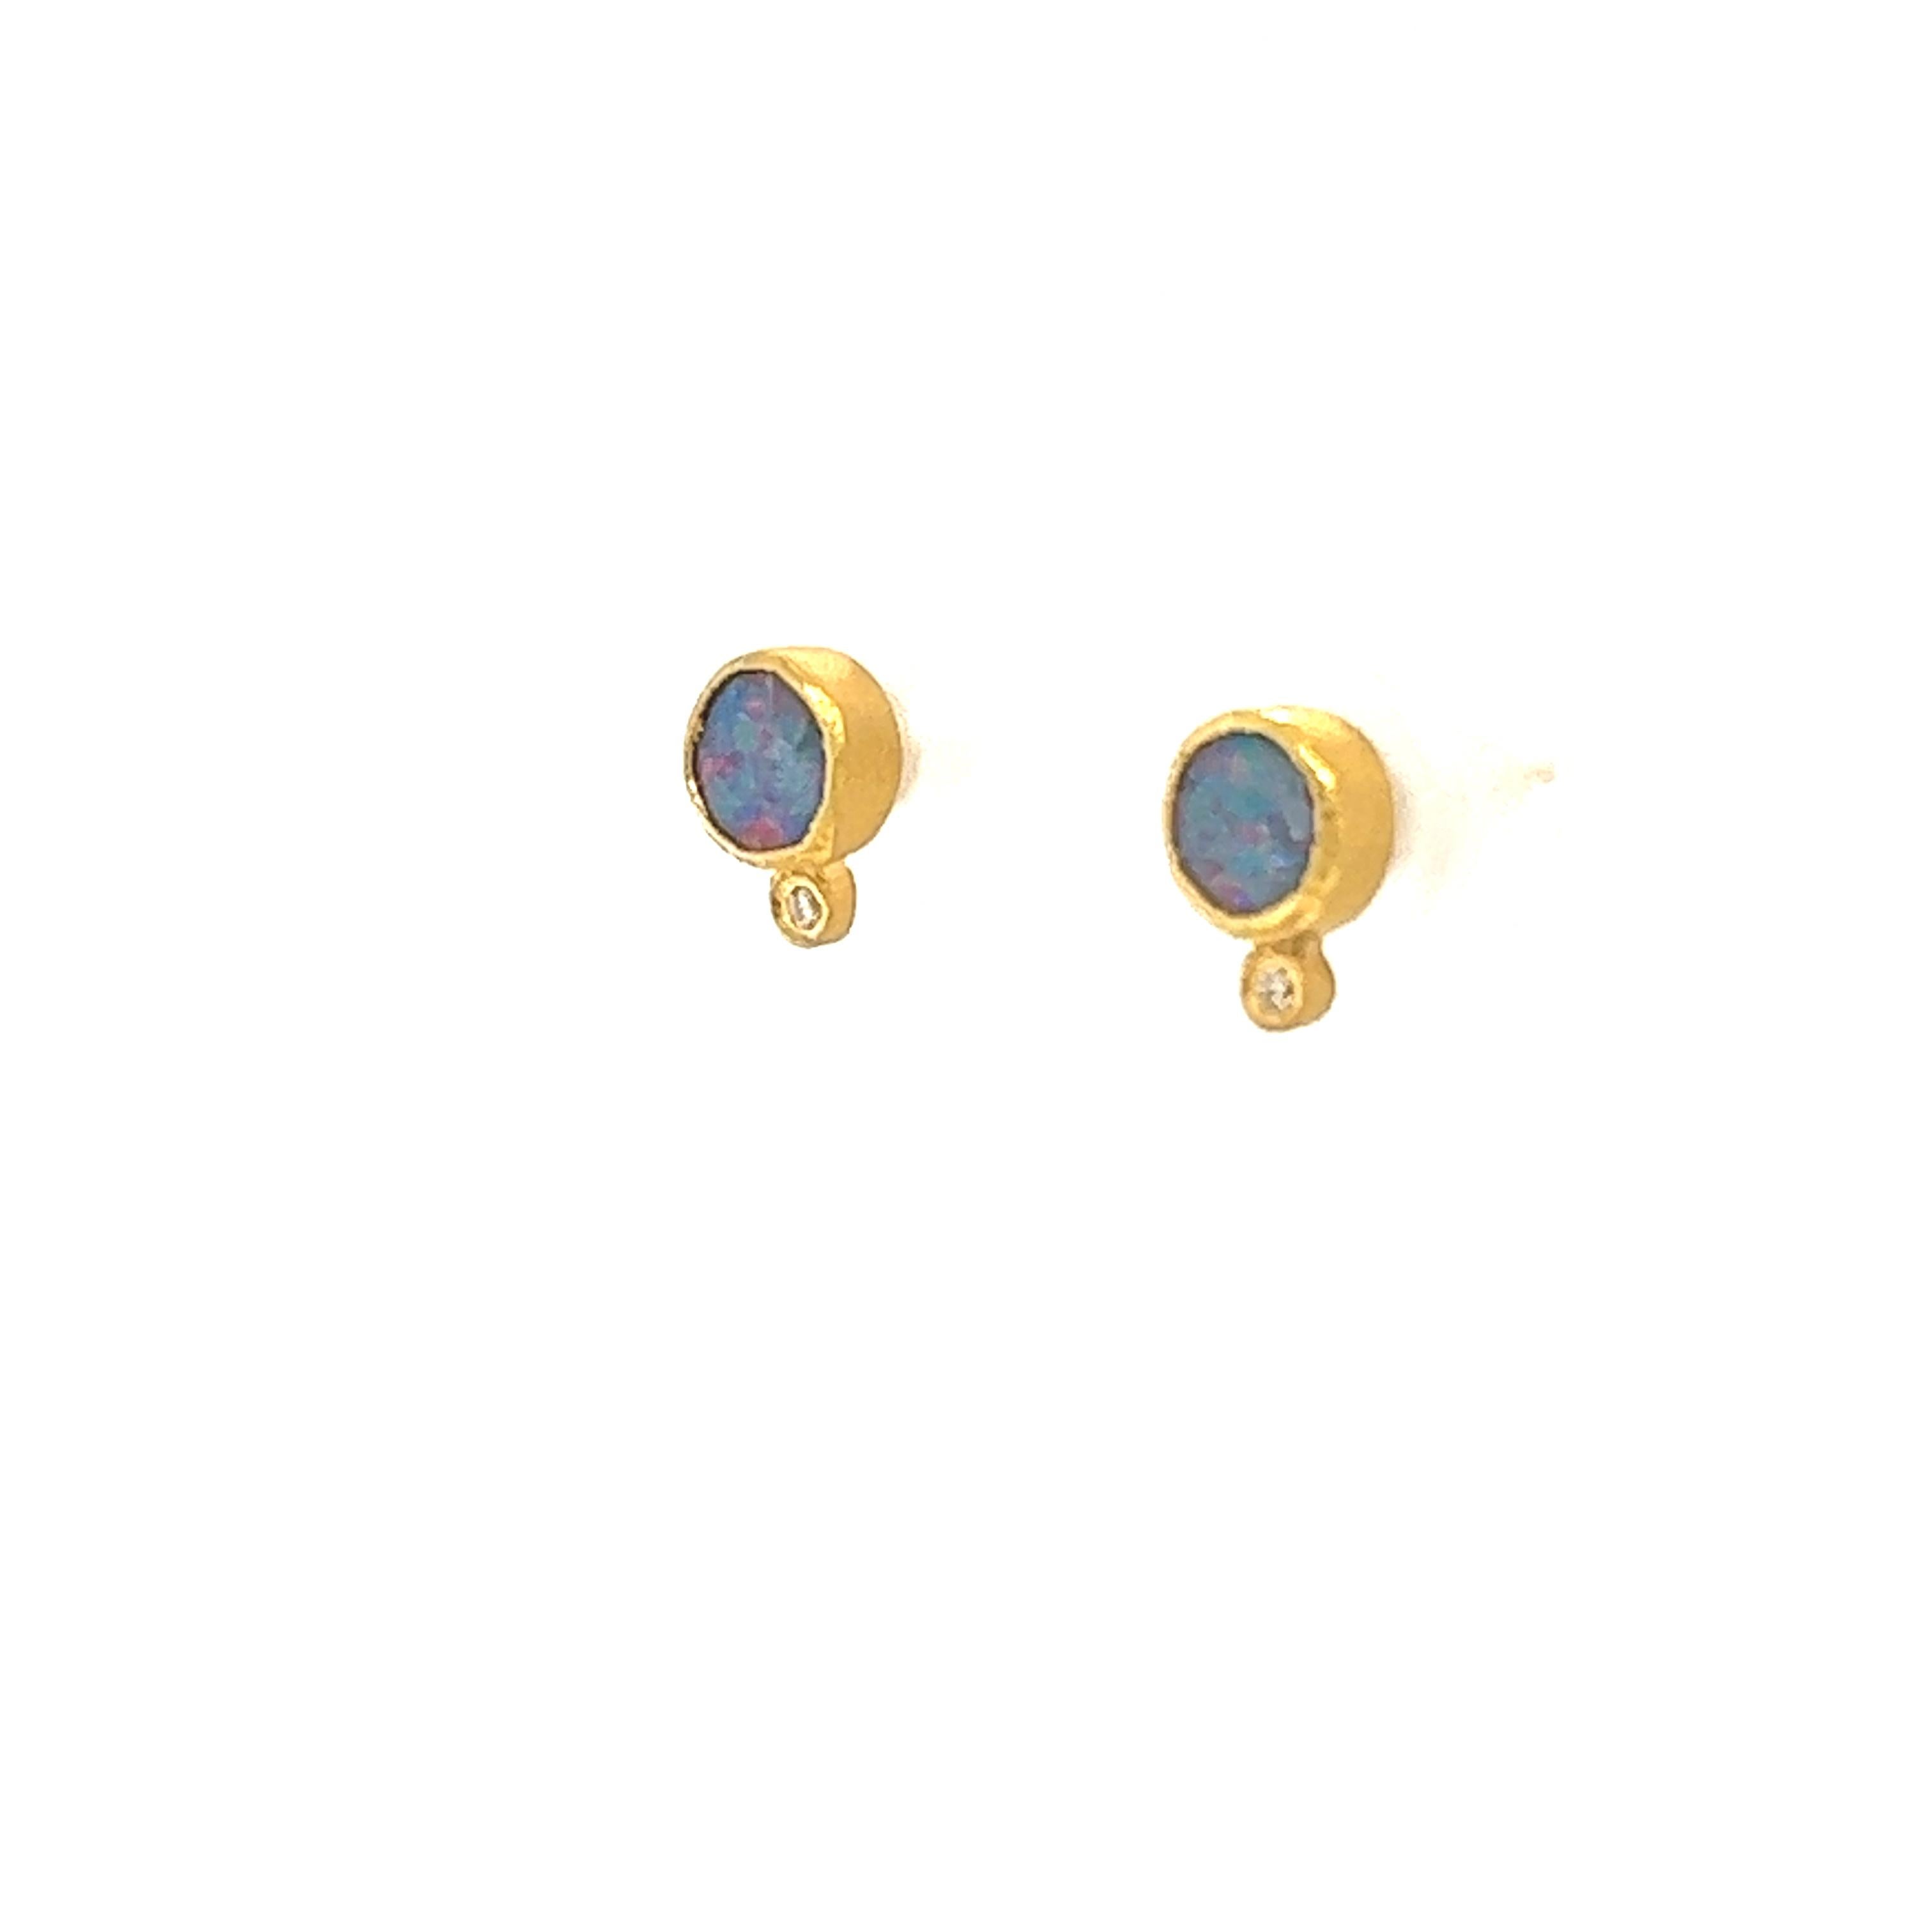 Round Cut Bright Rainbow Opal Stud Earrings with Diamonds, Solid 24K by Kurtulan